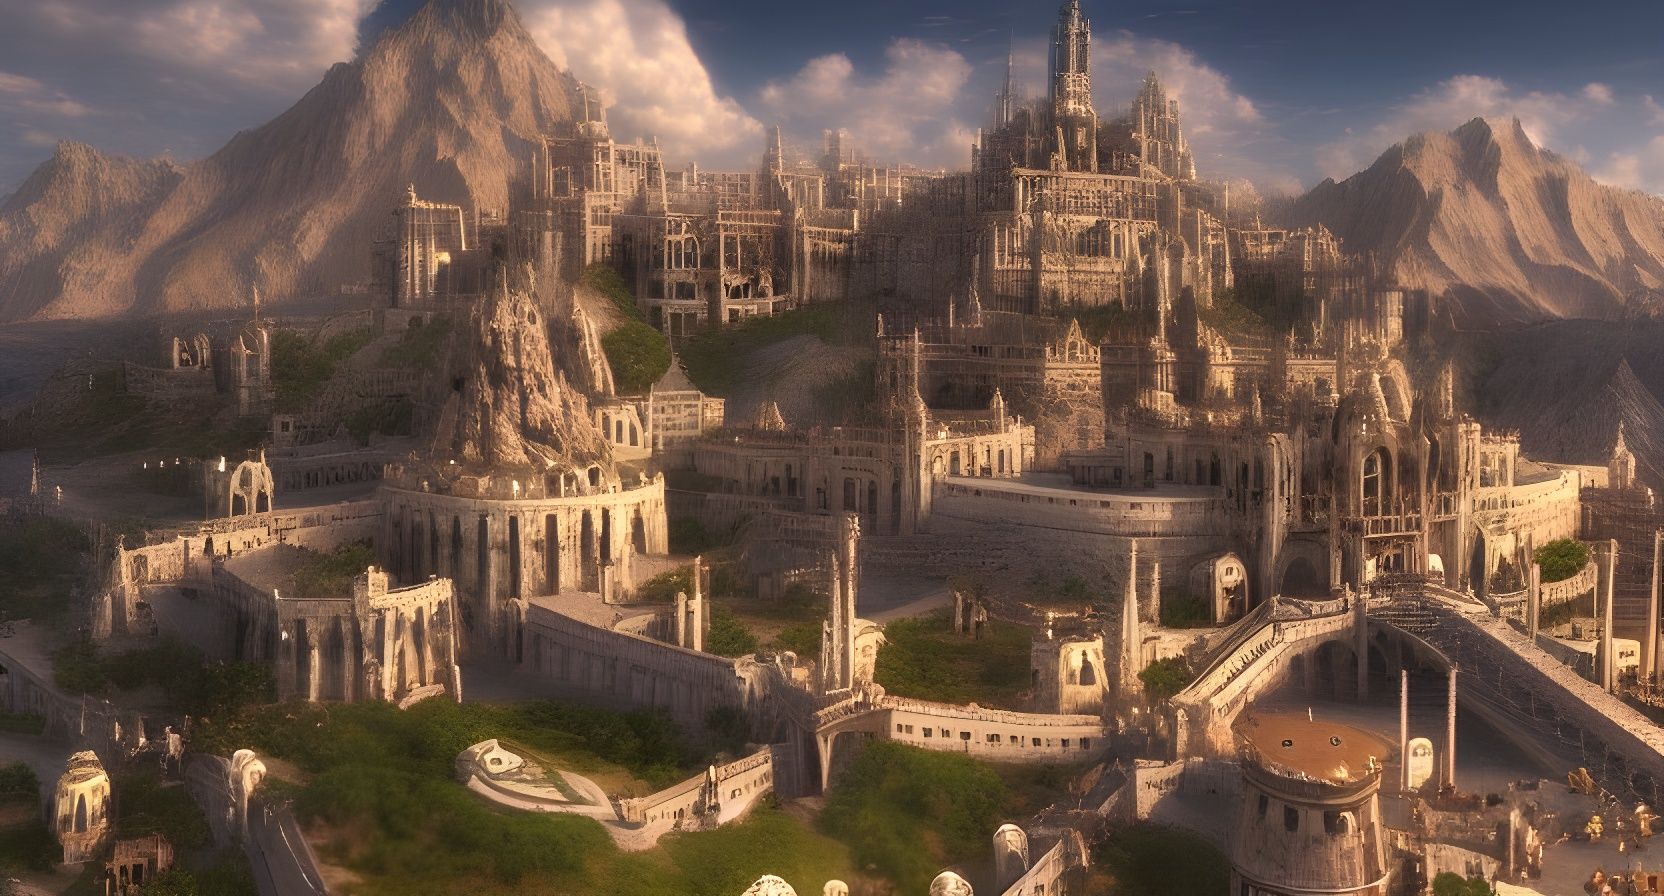 MinasTirith Castle, creation #18073